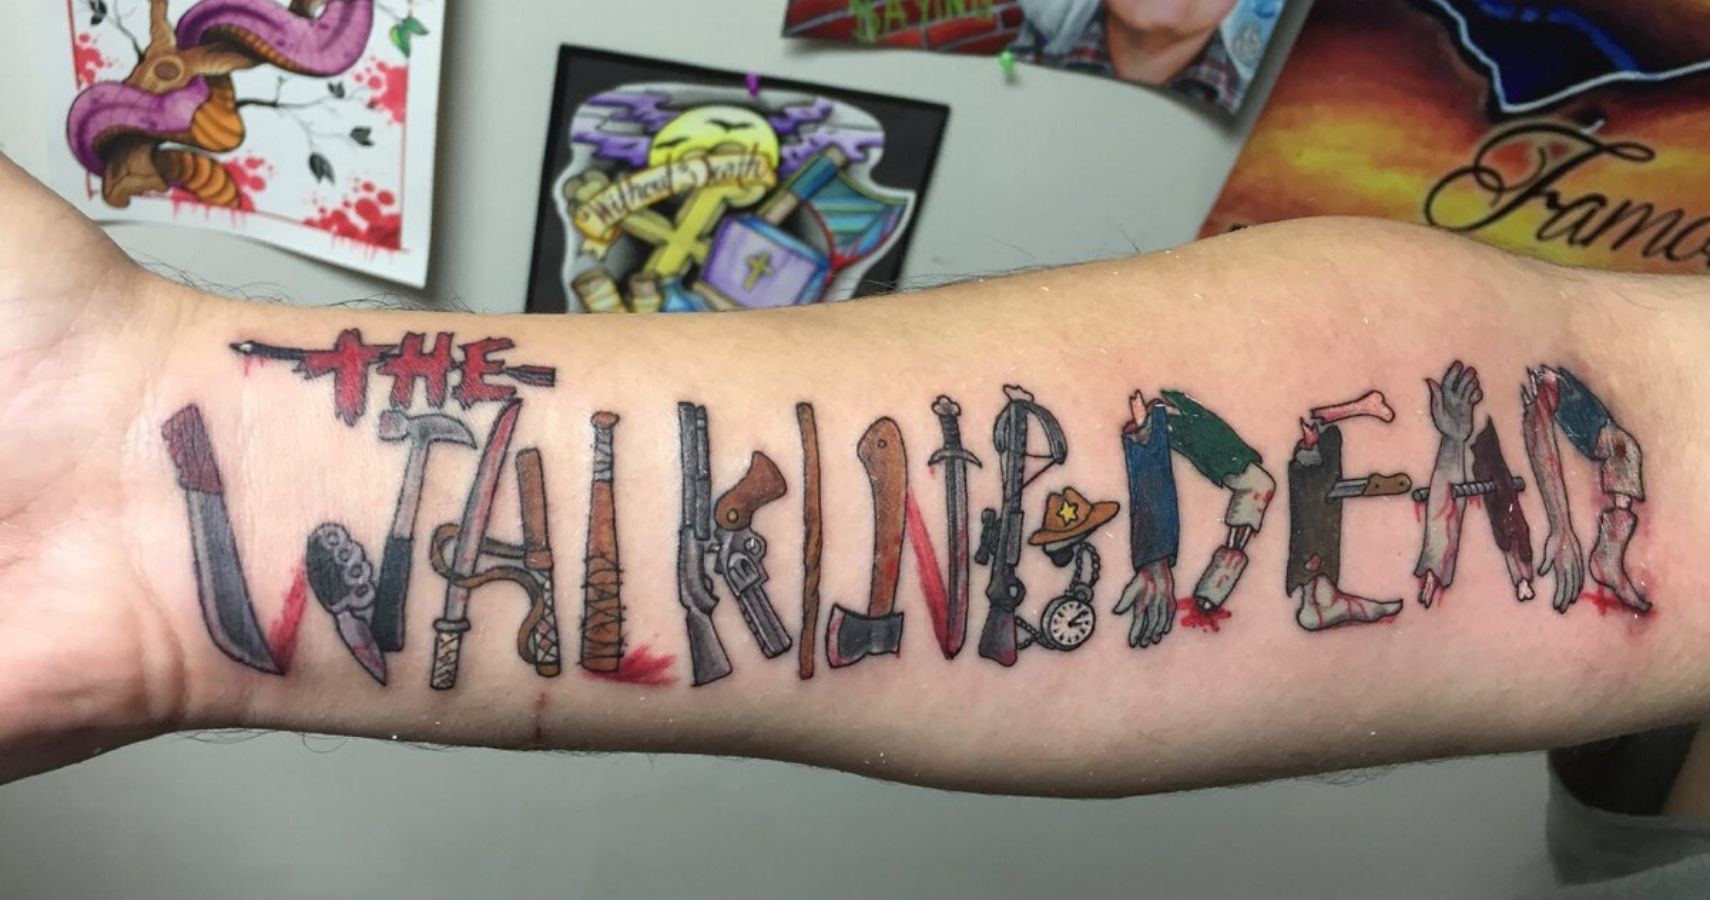 Tattoo Artist Creates Huge The Walking Dead Design On Fans Back